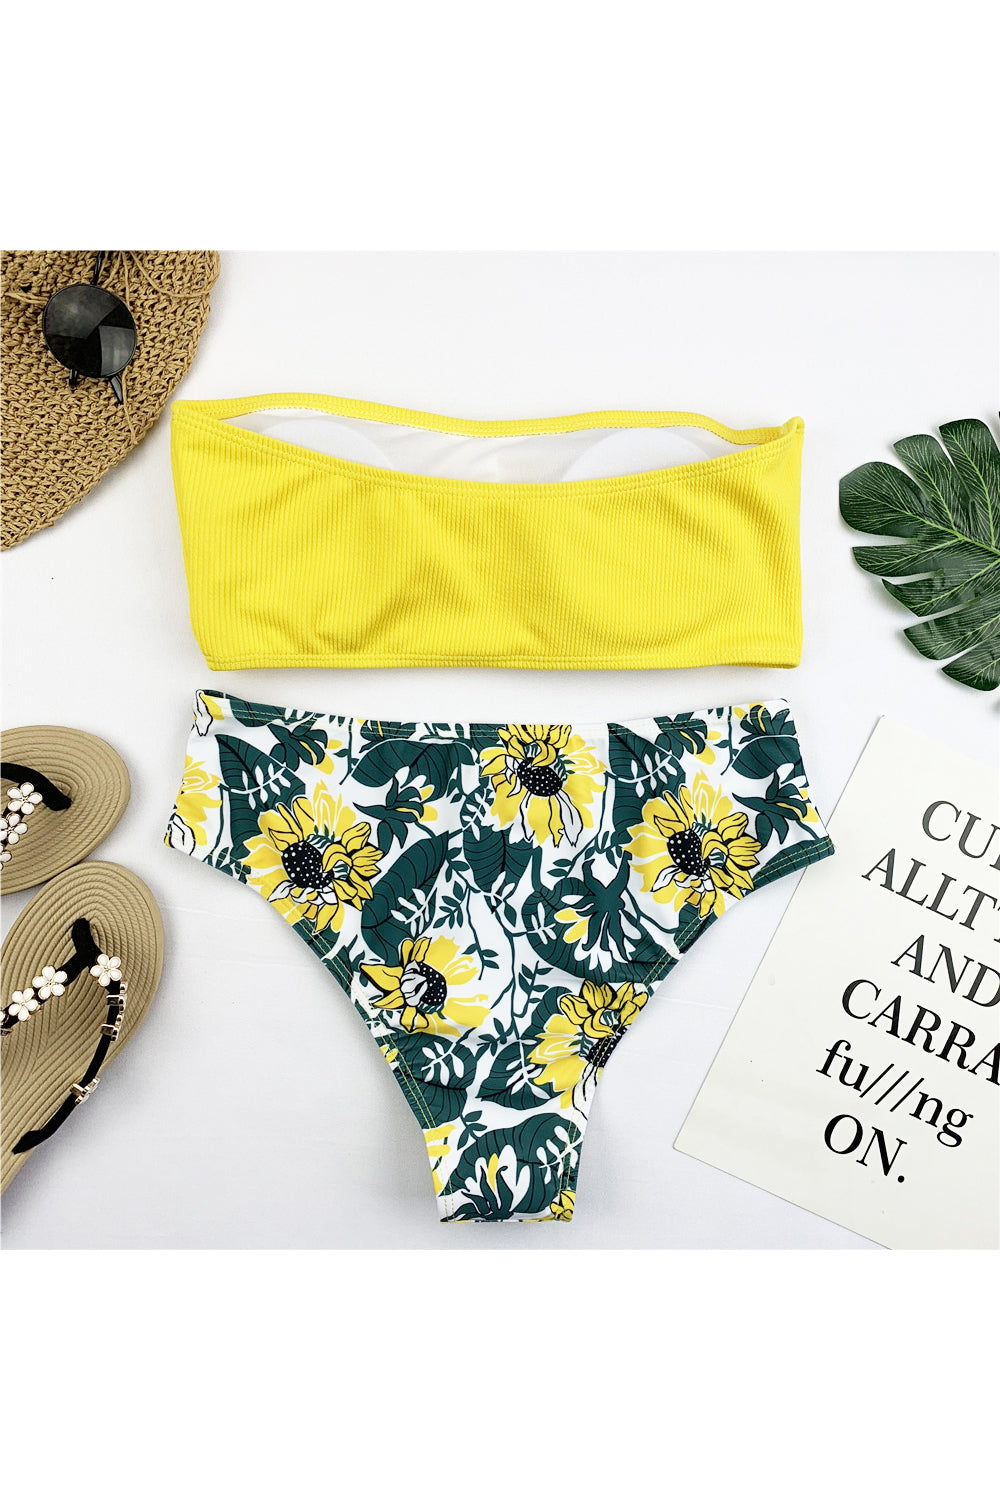 Push Up Swimsuit Brazilian Biquini Bikinis